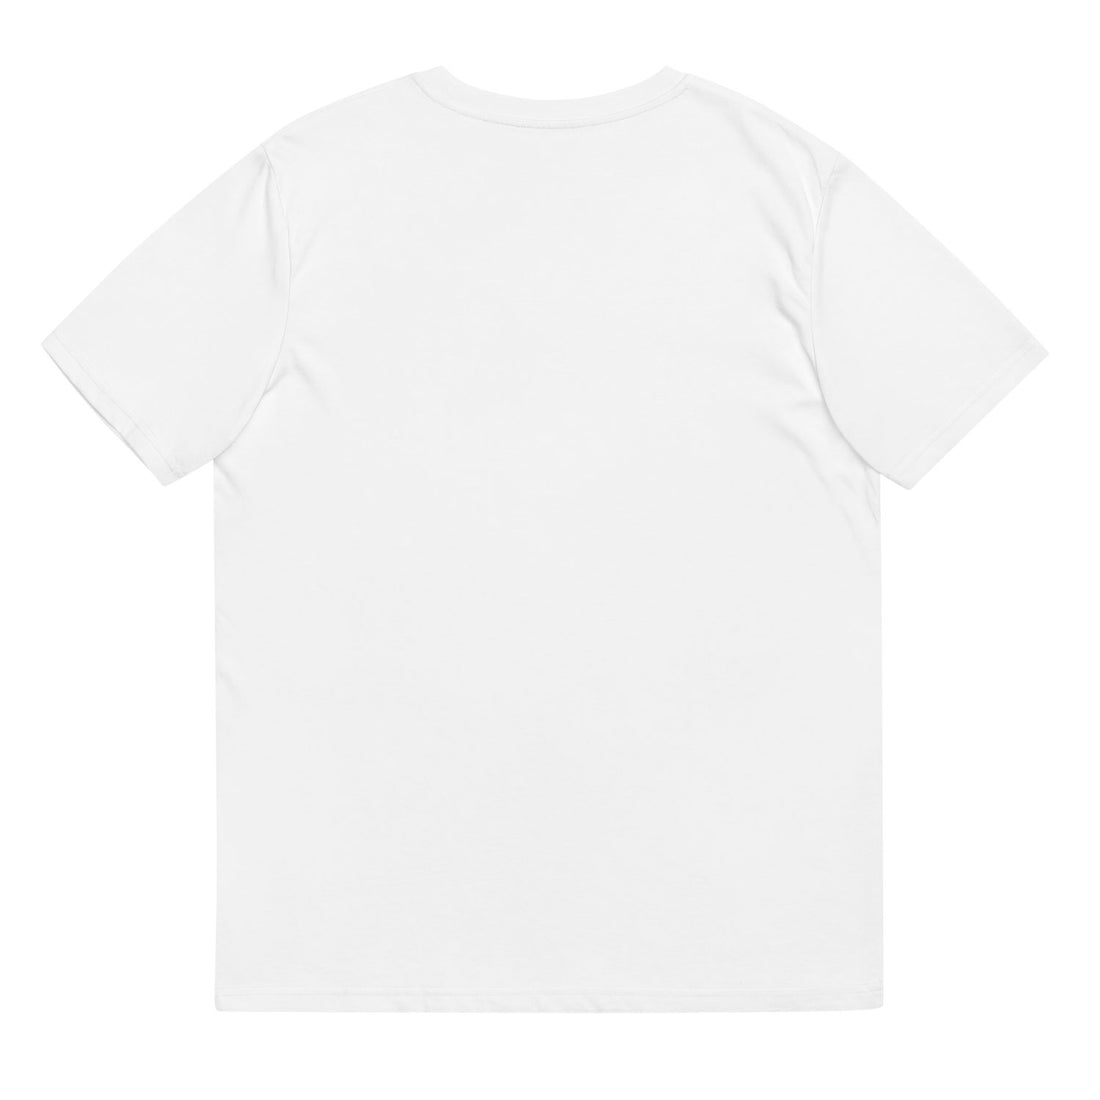 btc bitcoin graphic design tshirt white